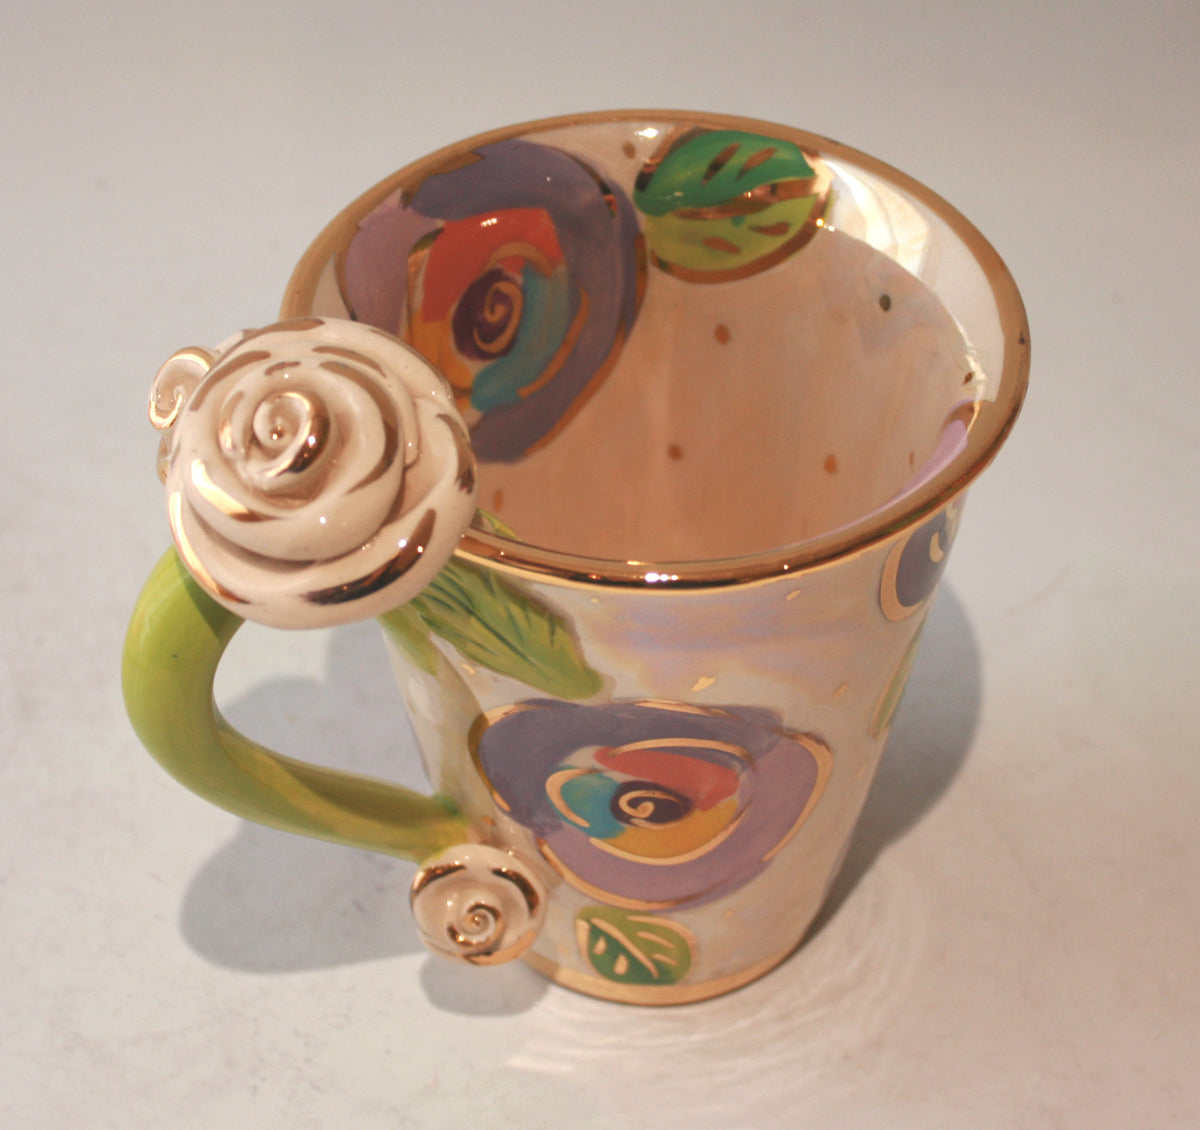 Rose Handled New Shape Large Mug in Gold New Rose Polka